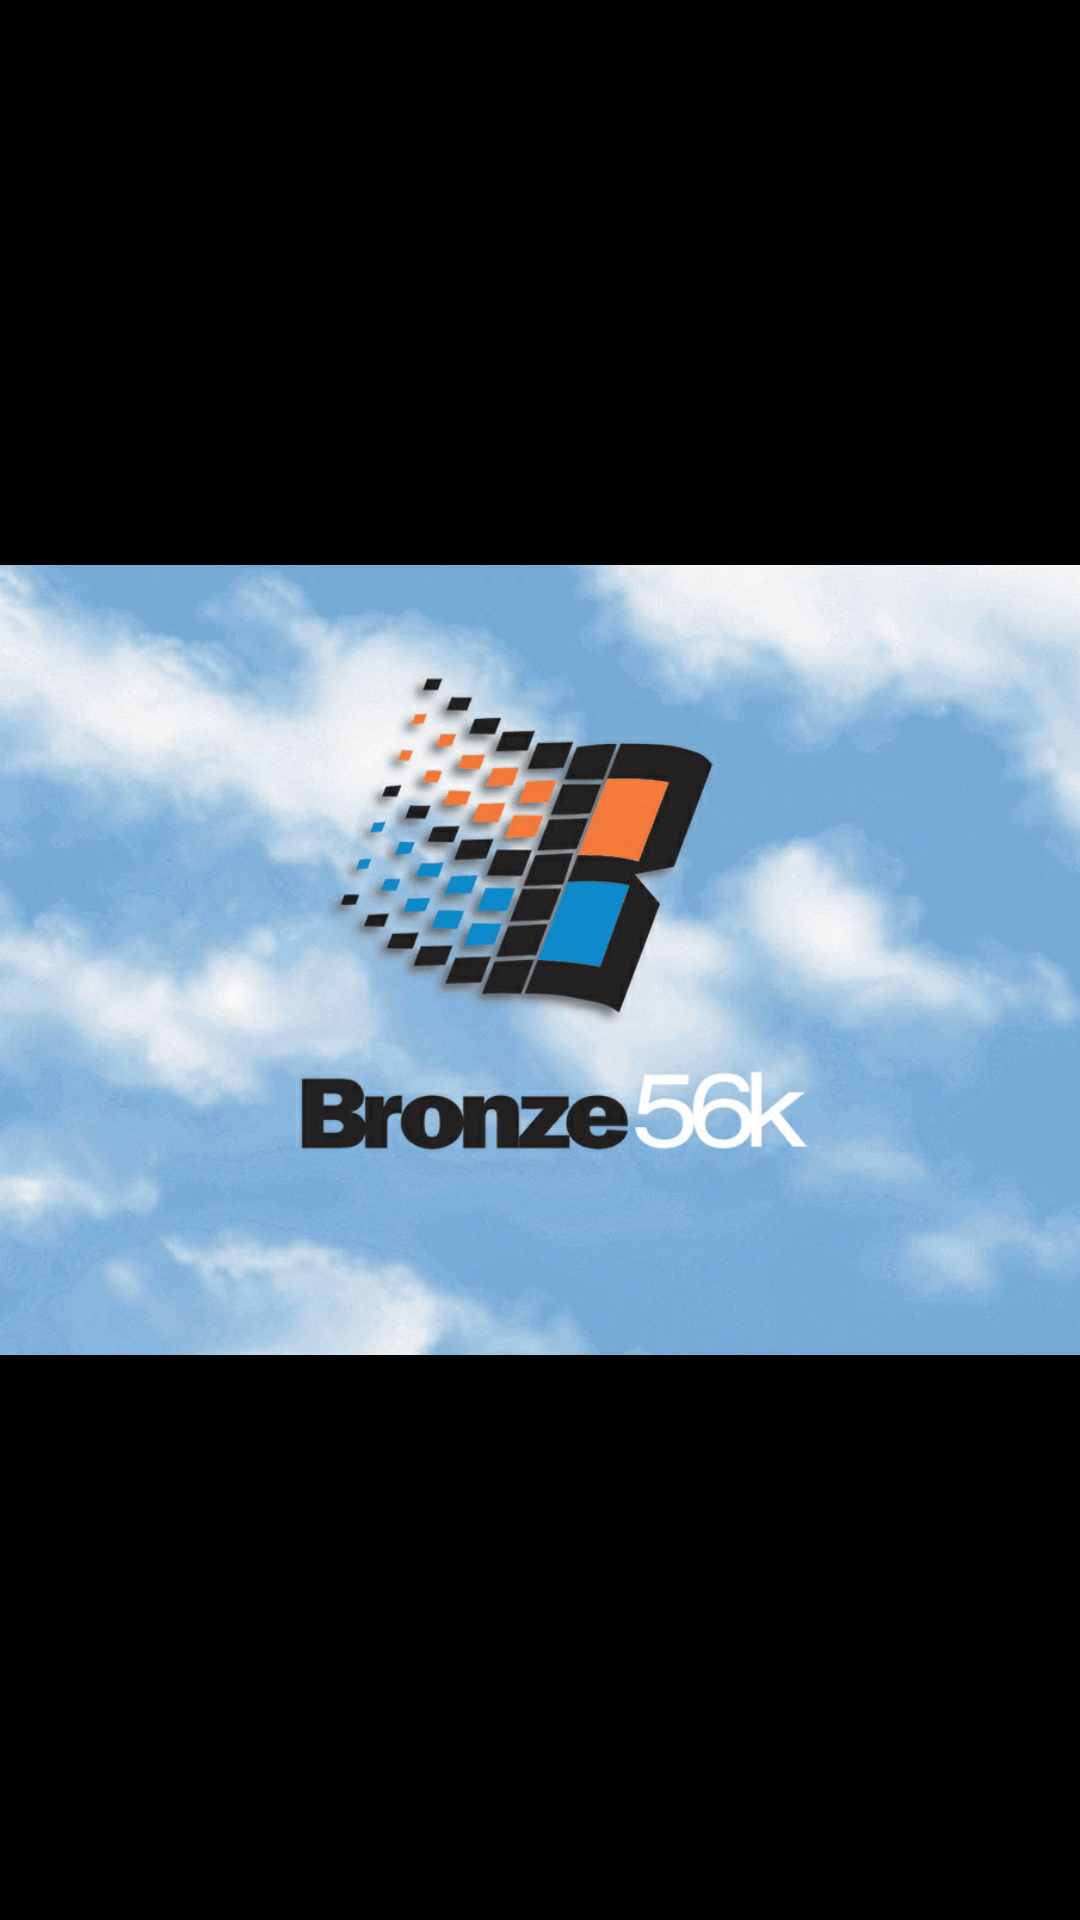 Bronze56k Logo - You guys know about Bronze 56K?